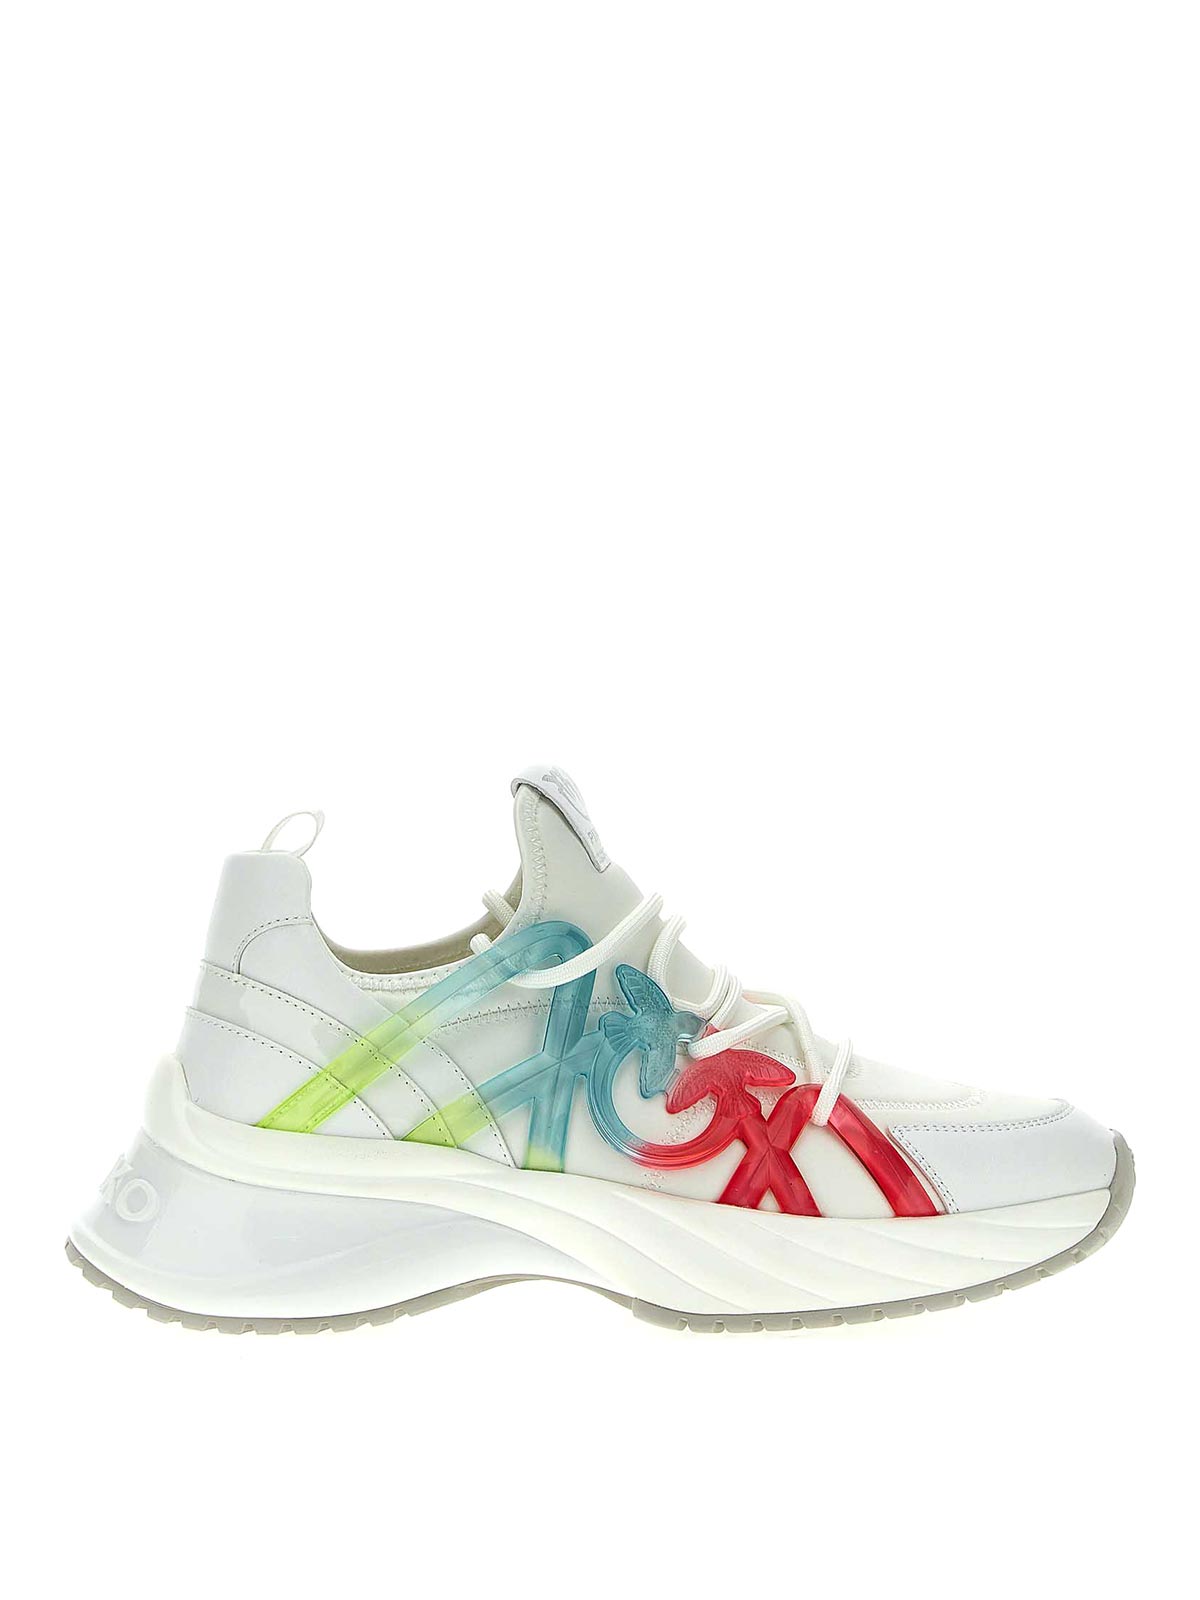 Pinko Ariel Chunky Sneakers In Multicolour